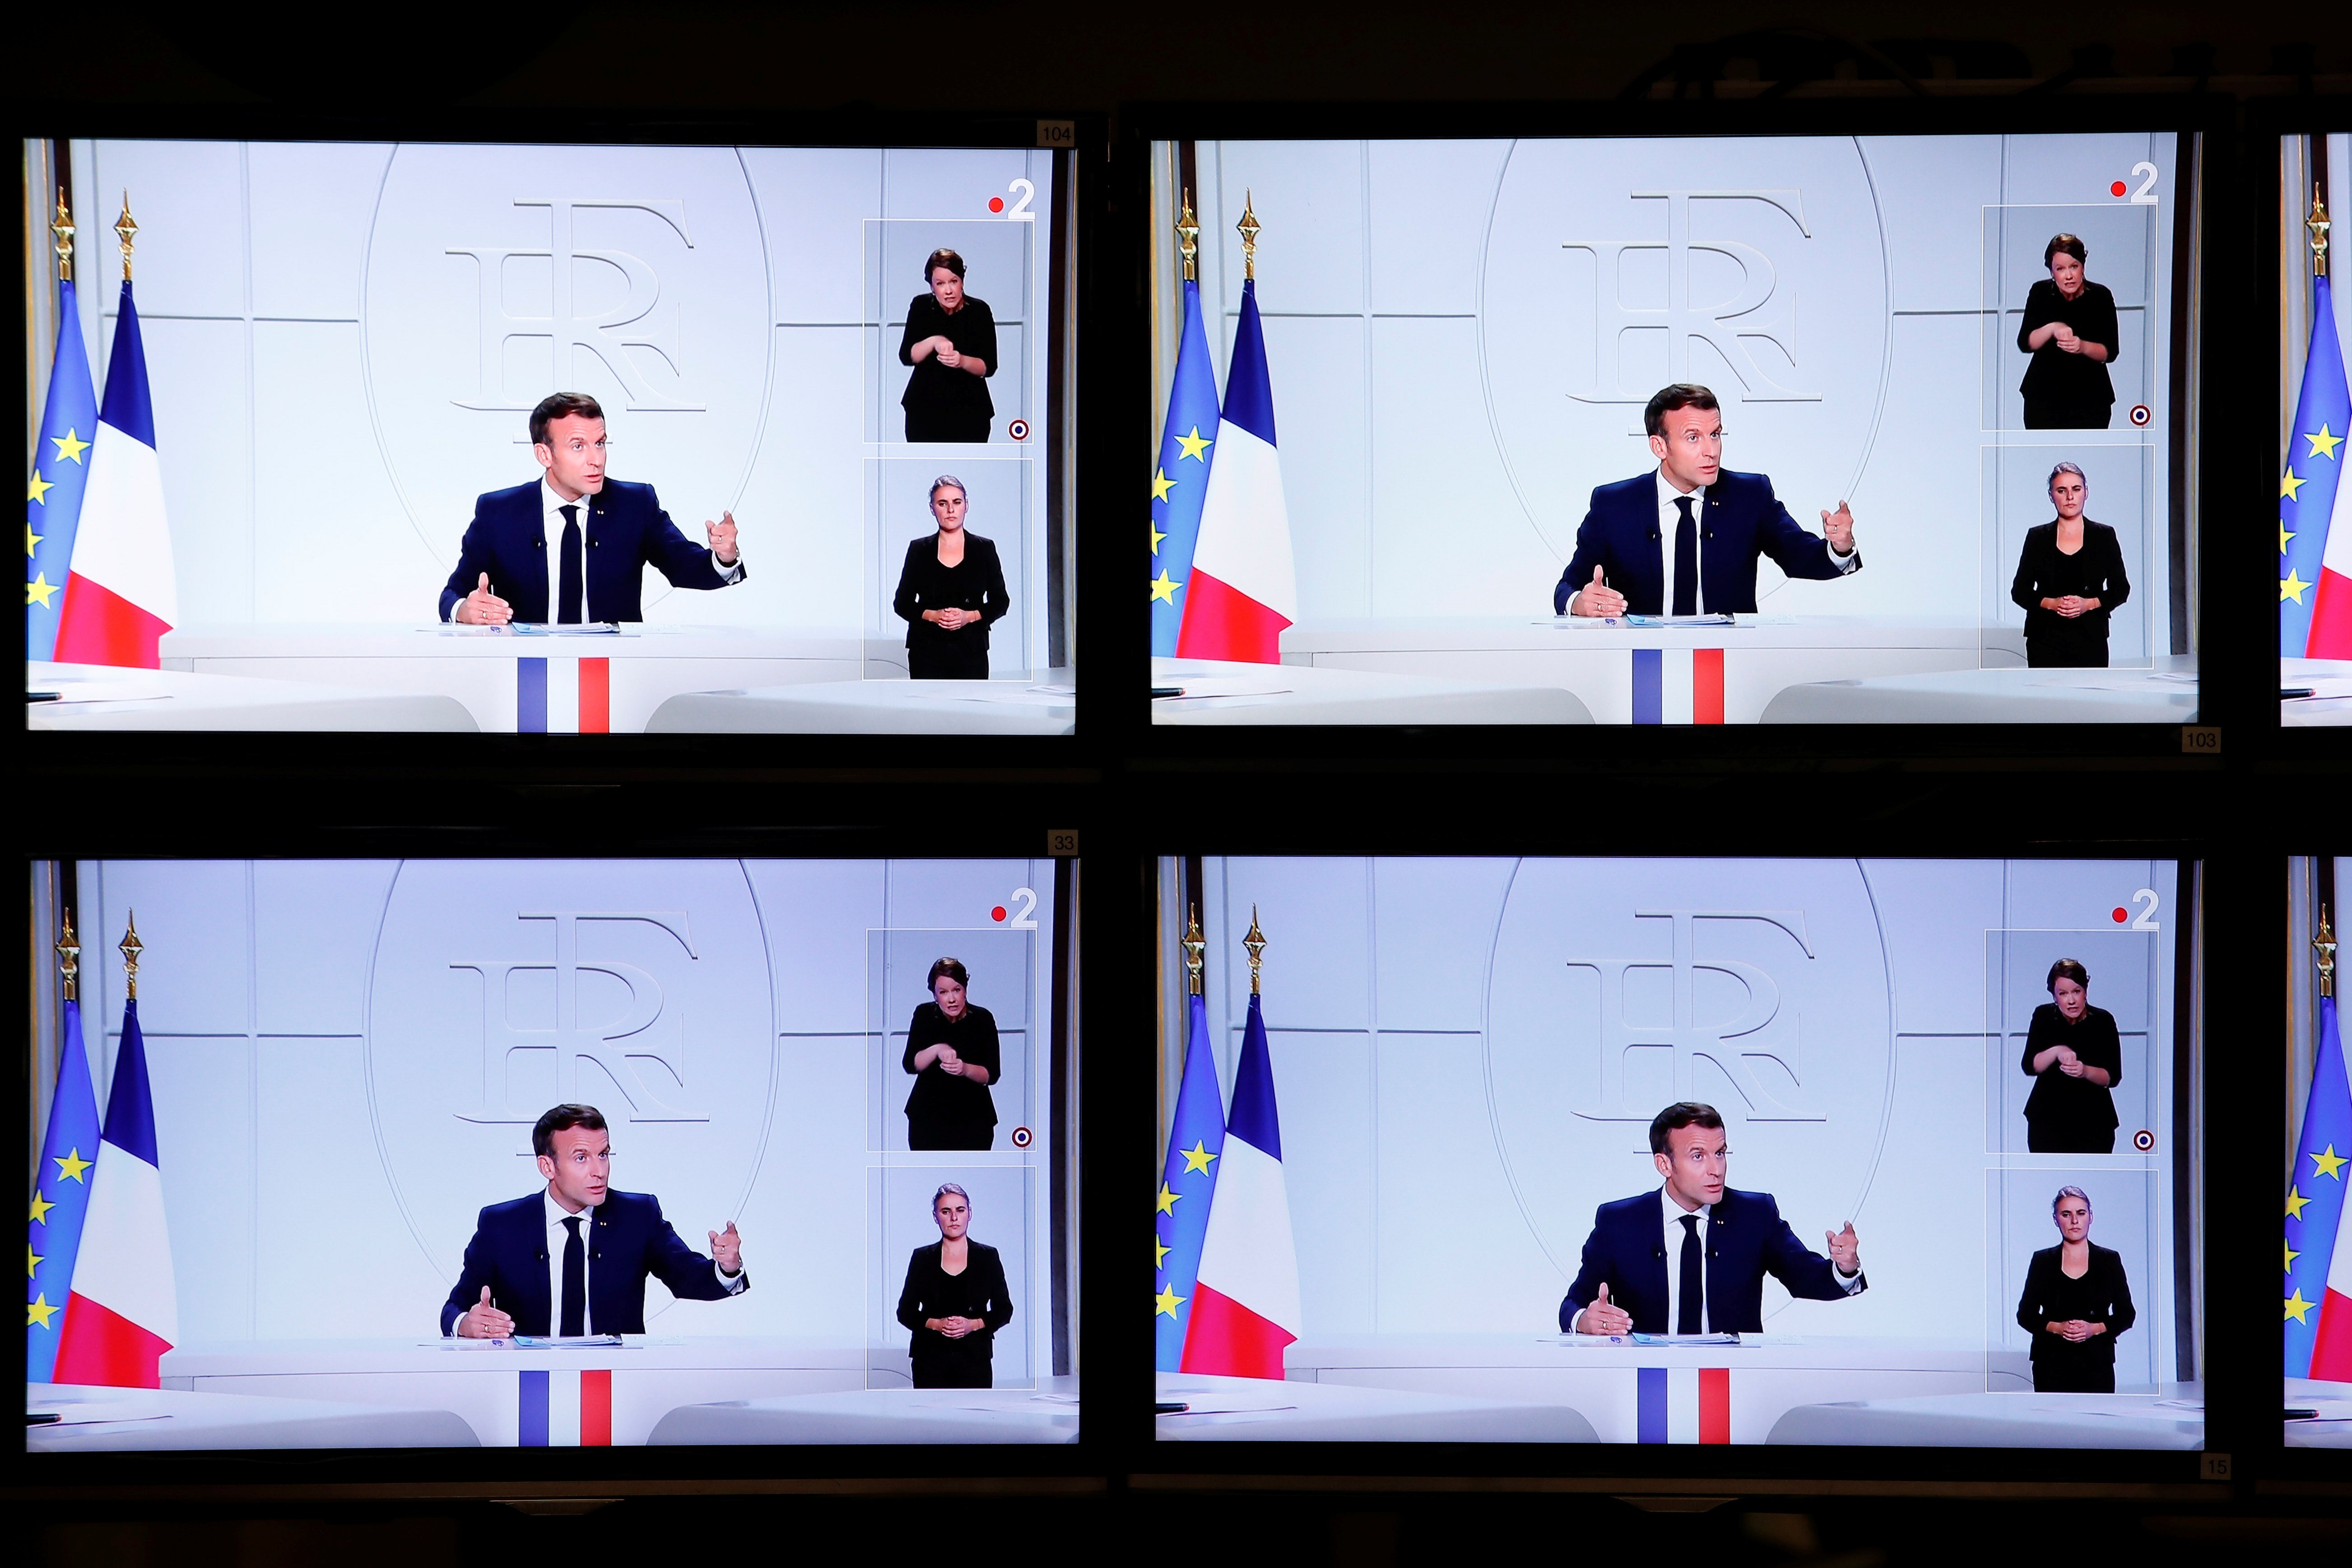 President Macron speaks on national television